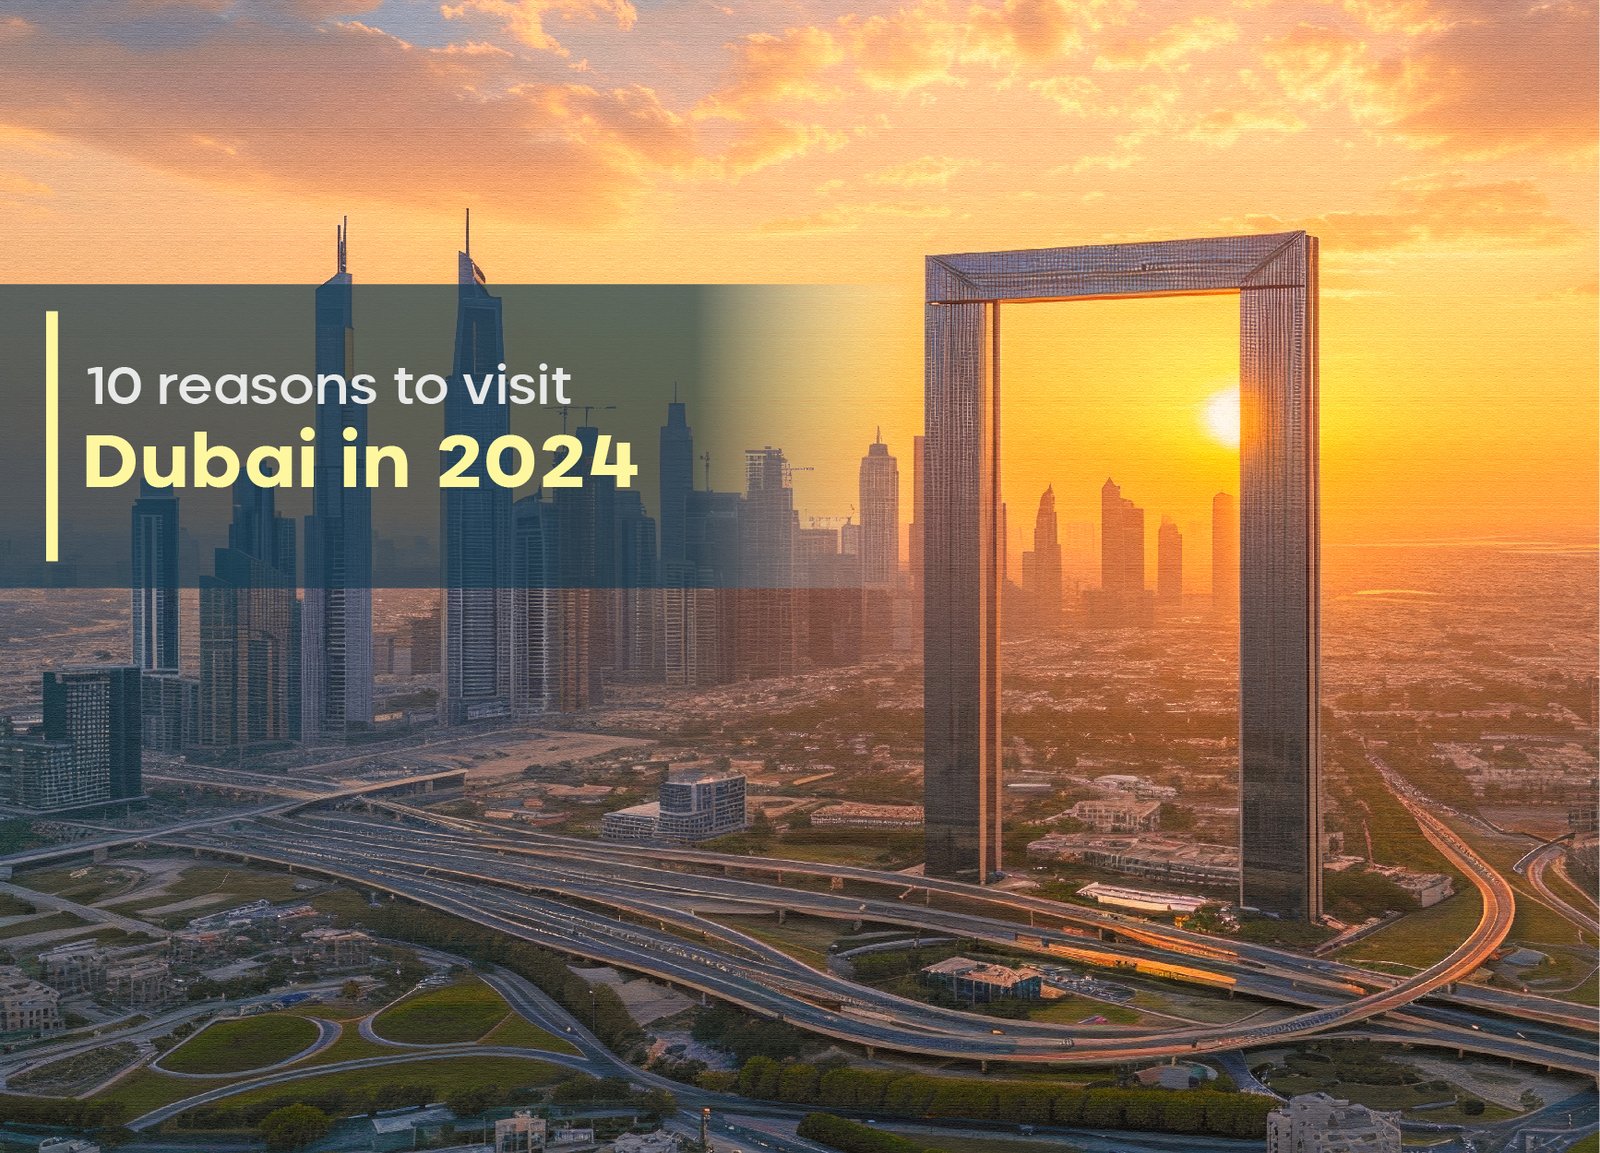 10 reasons to visit Dubai in 2024